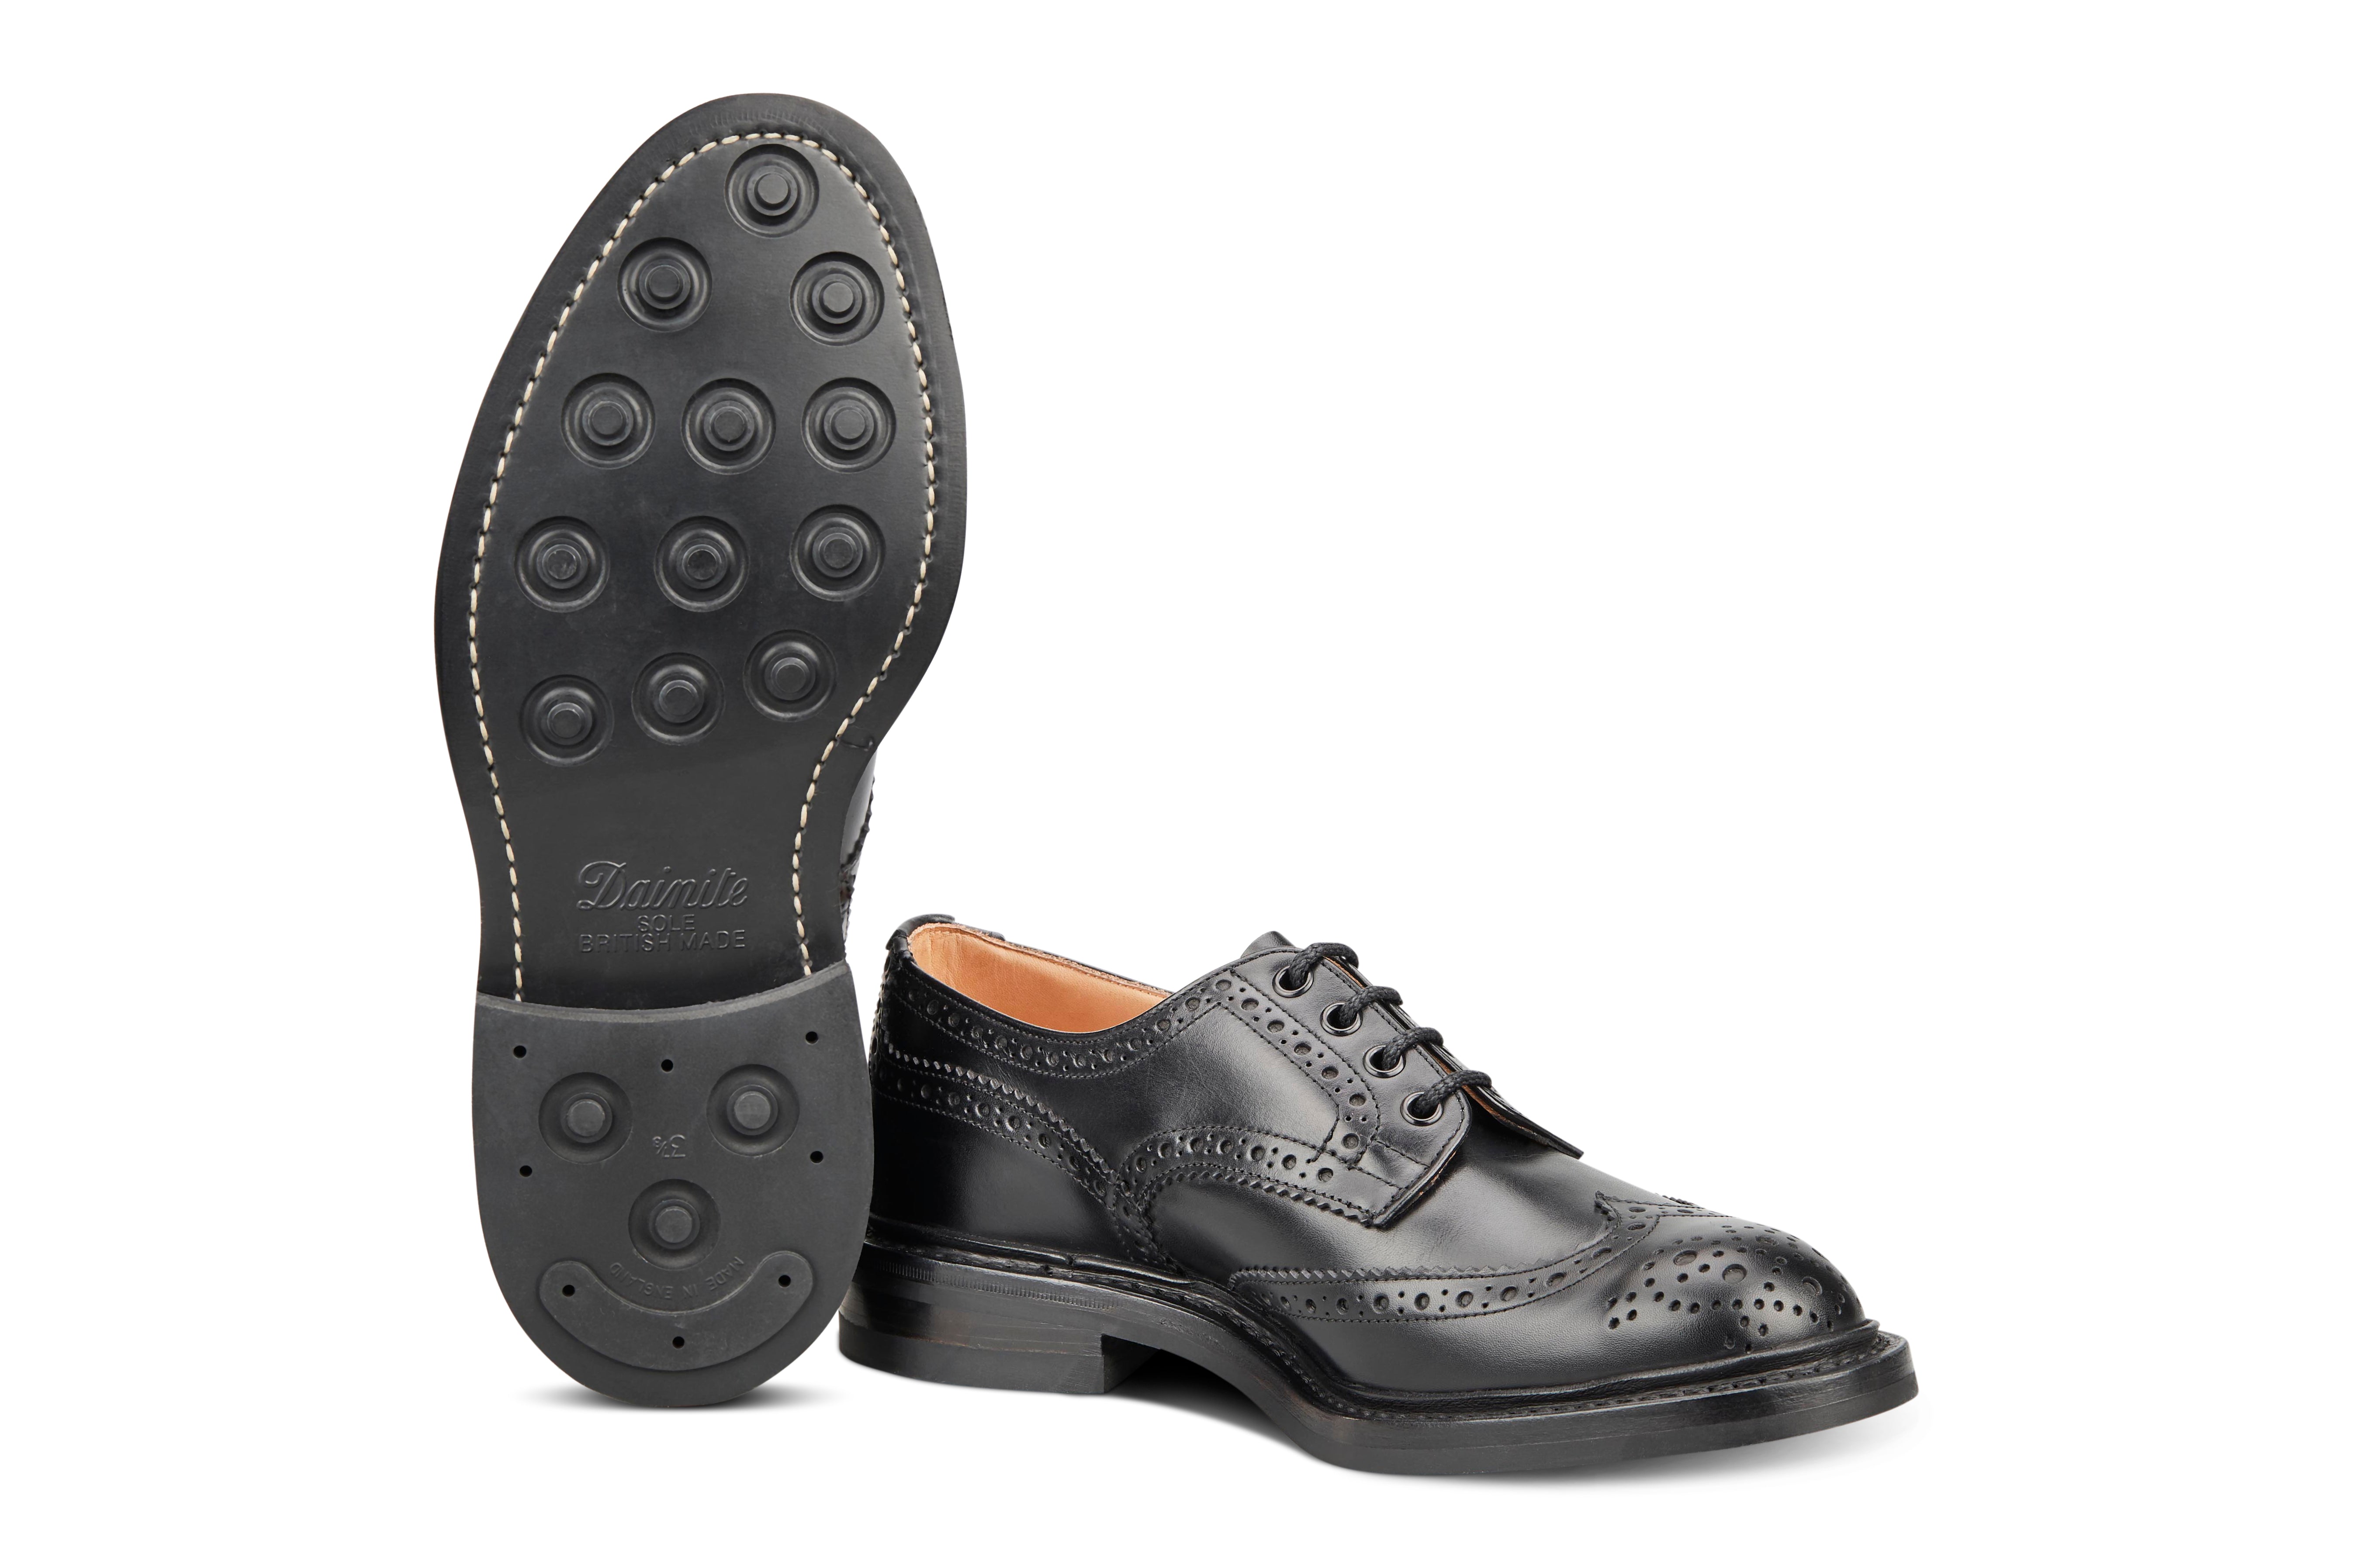 Trickers - Bourton Country Shoe - Black Box Calf